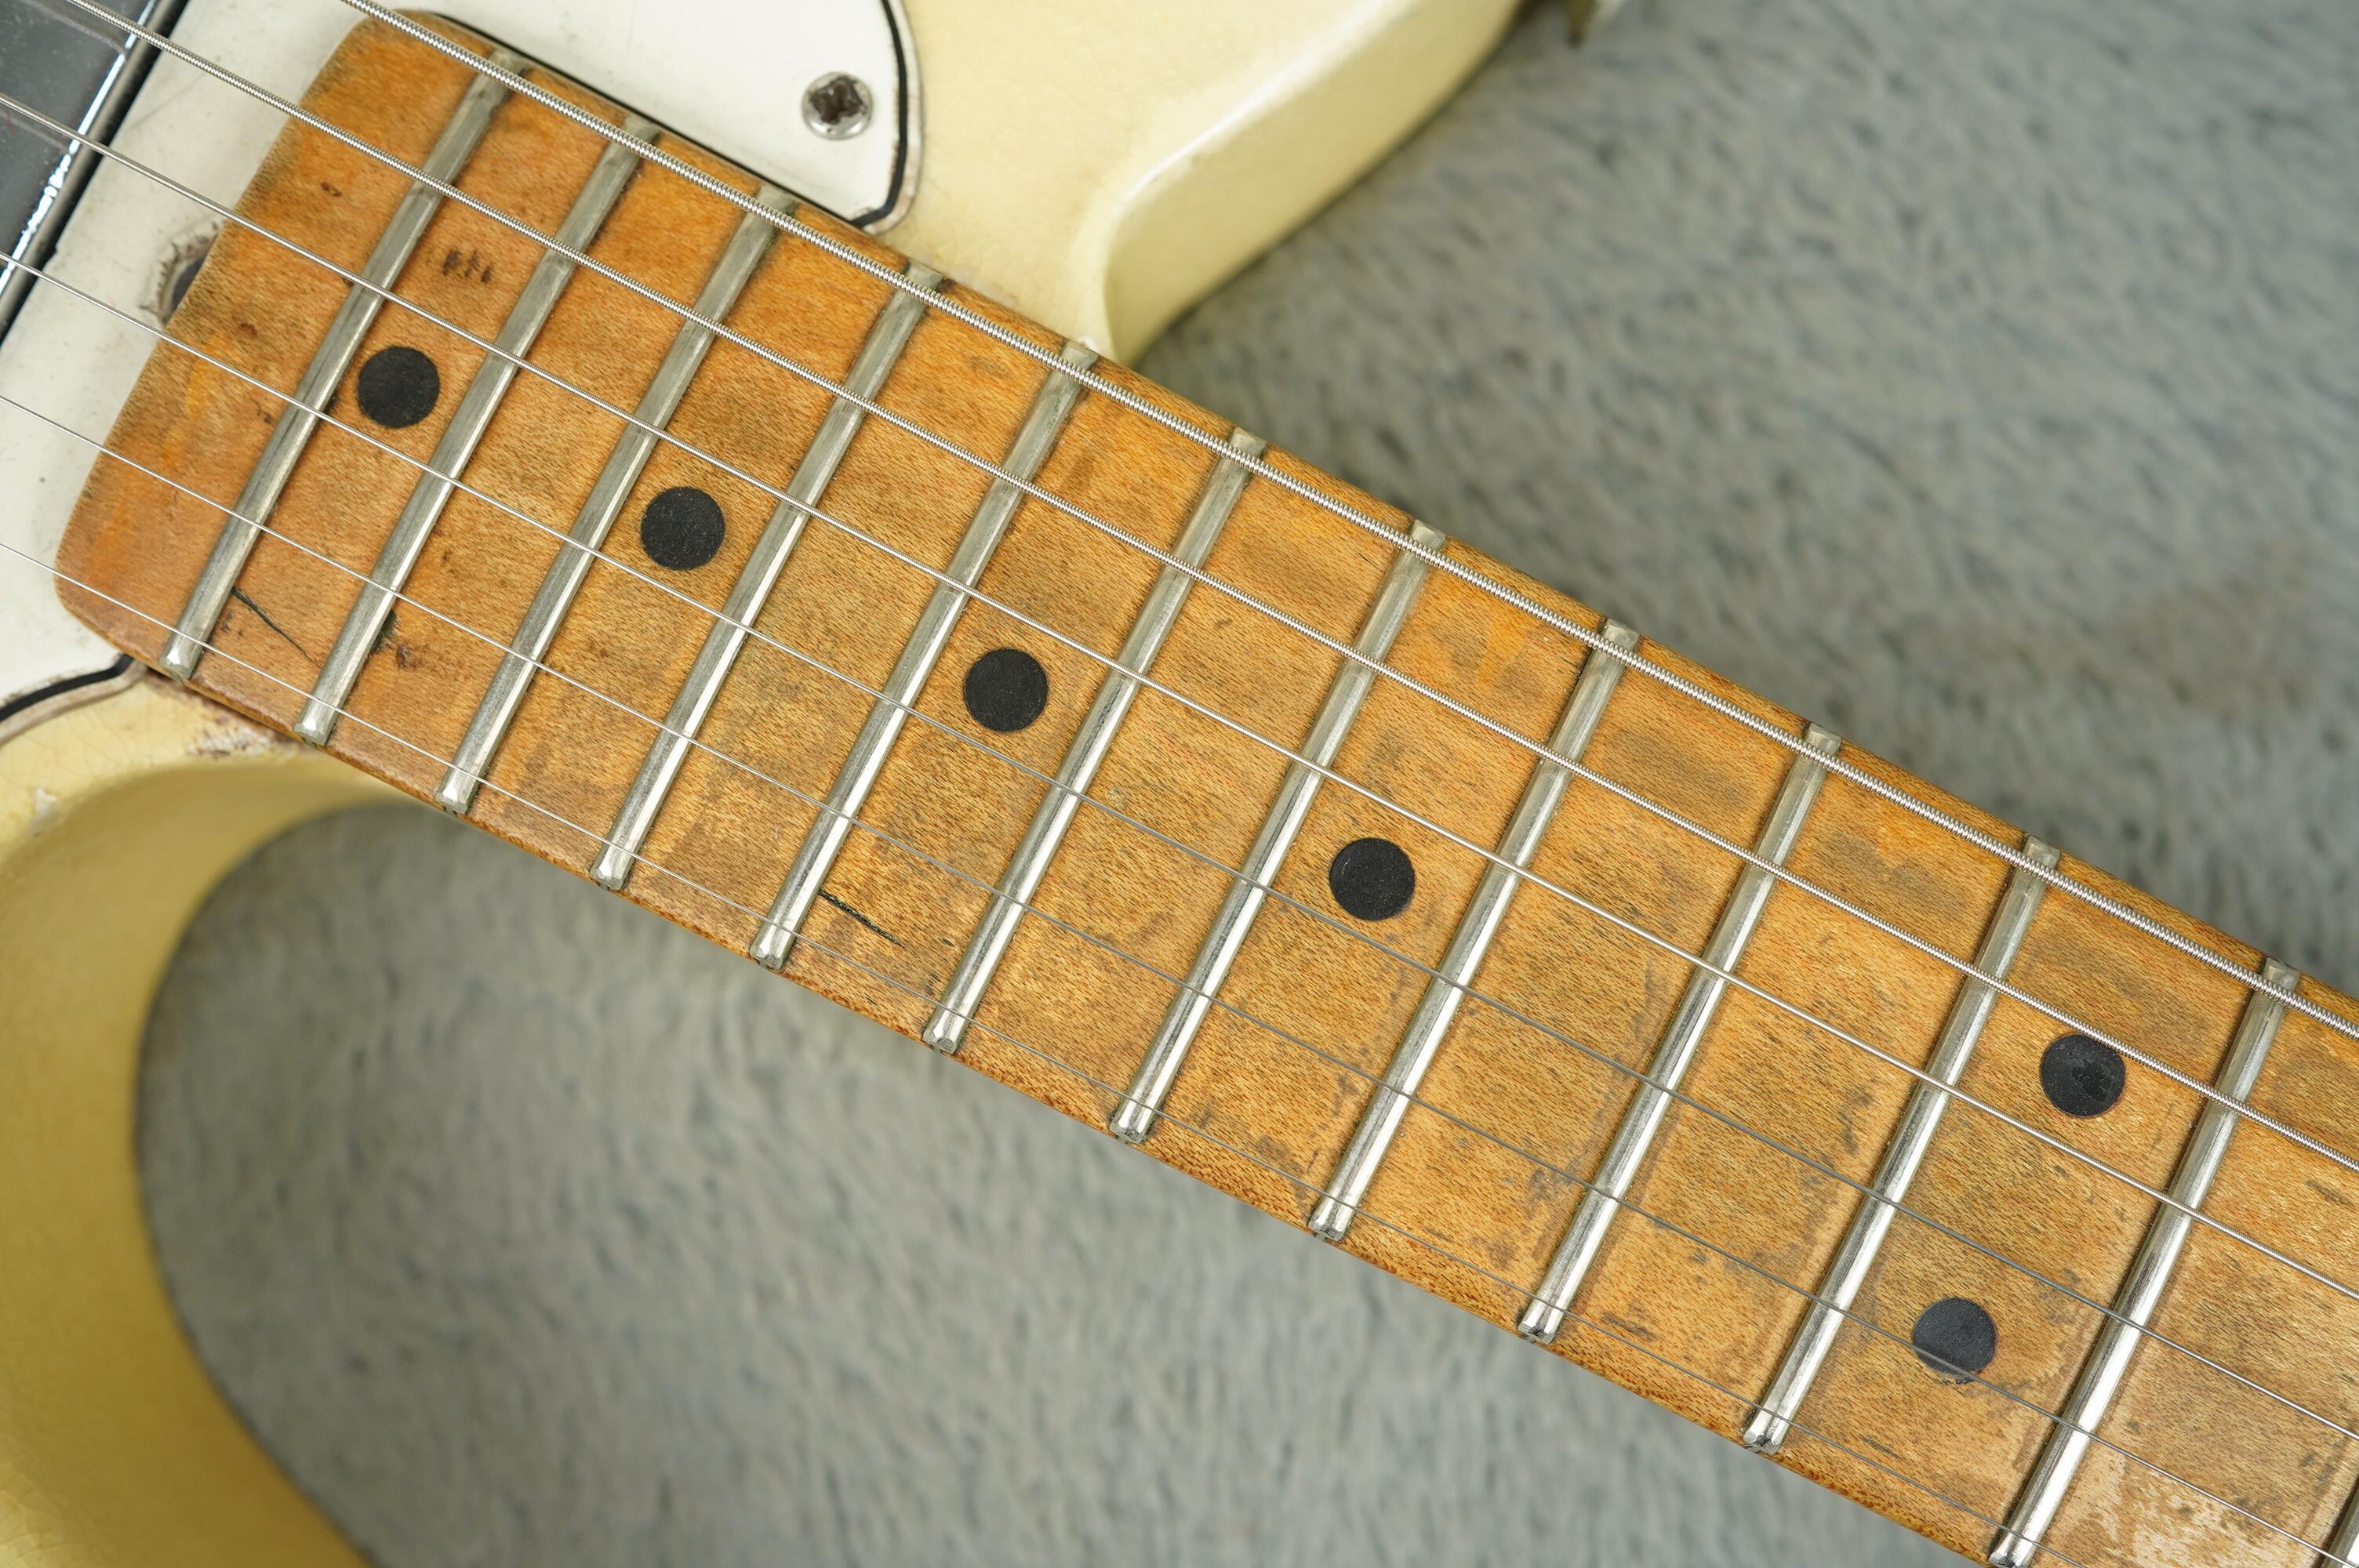 1966 Fender Telecaster Clive Brown refin